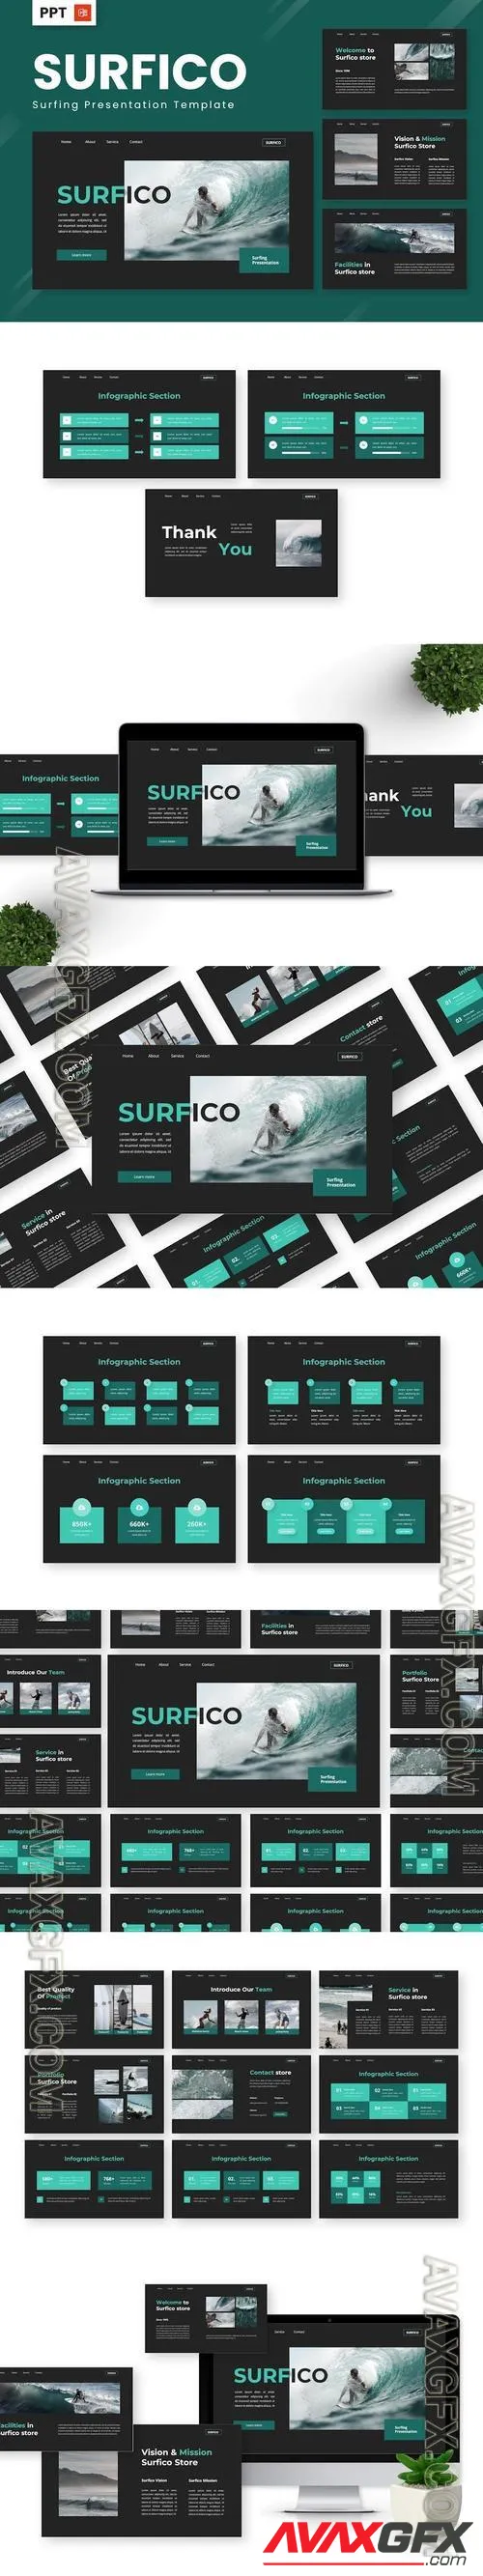 Surfico - Surfing Powerpoint Templates -